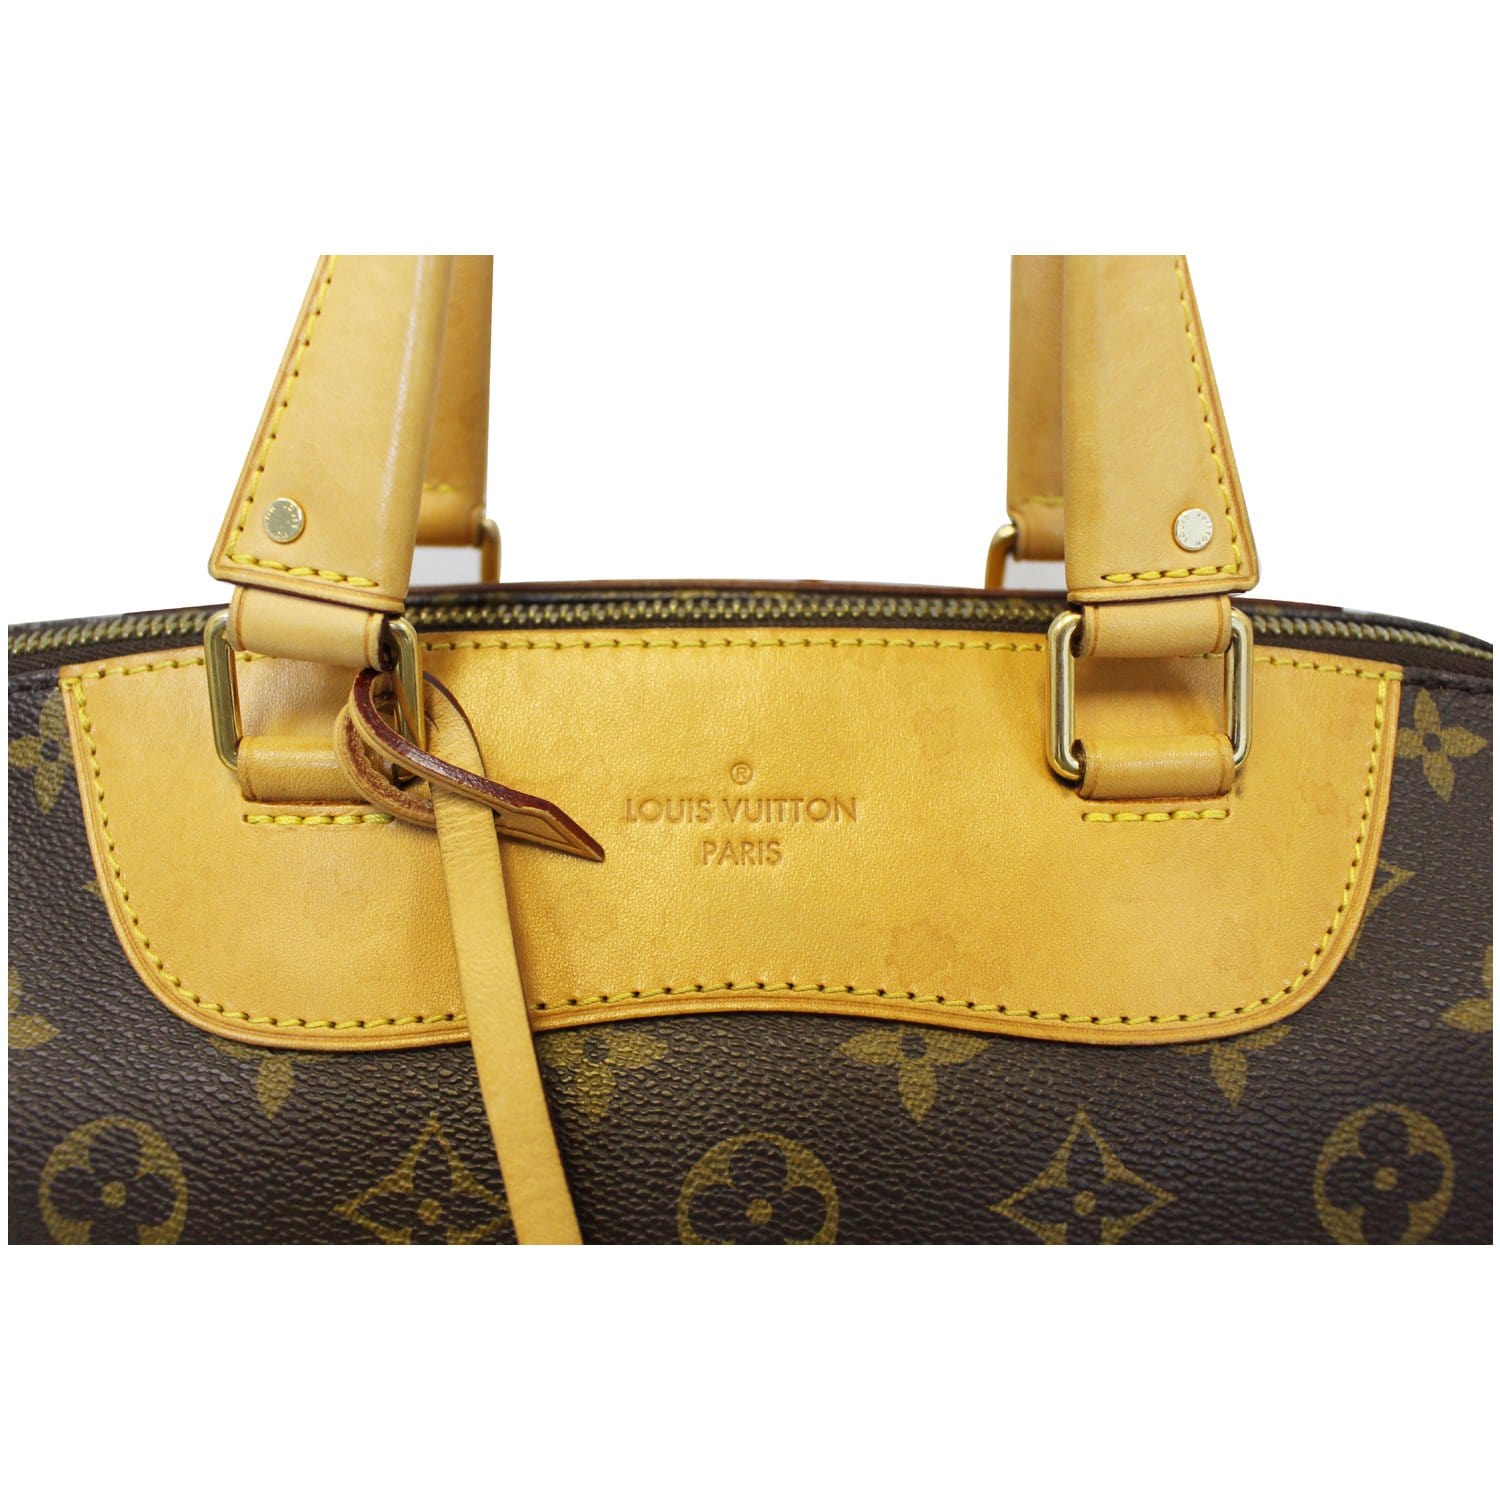 Retiro NM my newest LV purchase!  Louis vuitton handbags outlet